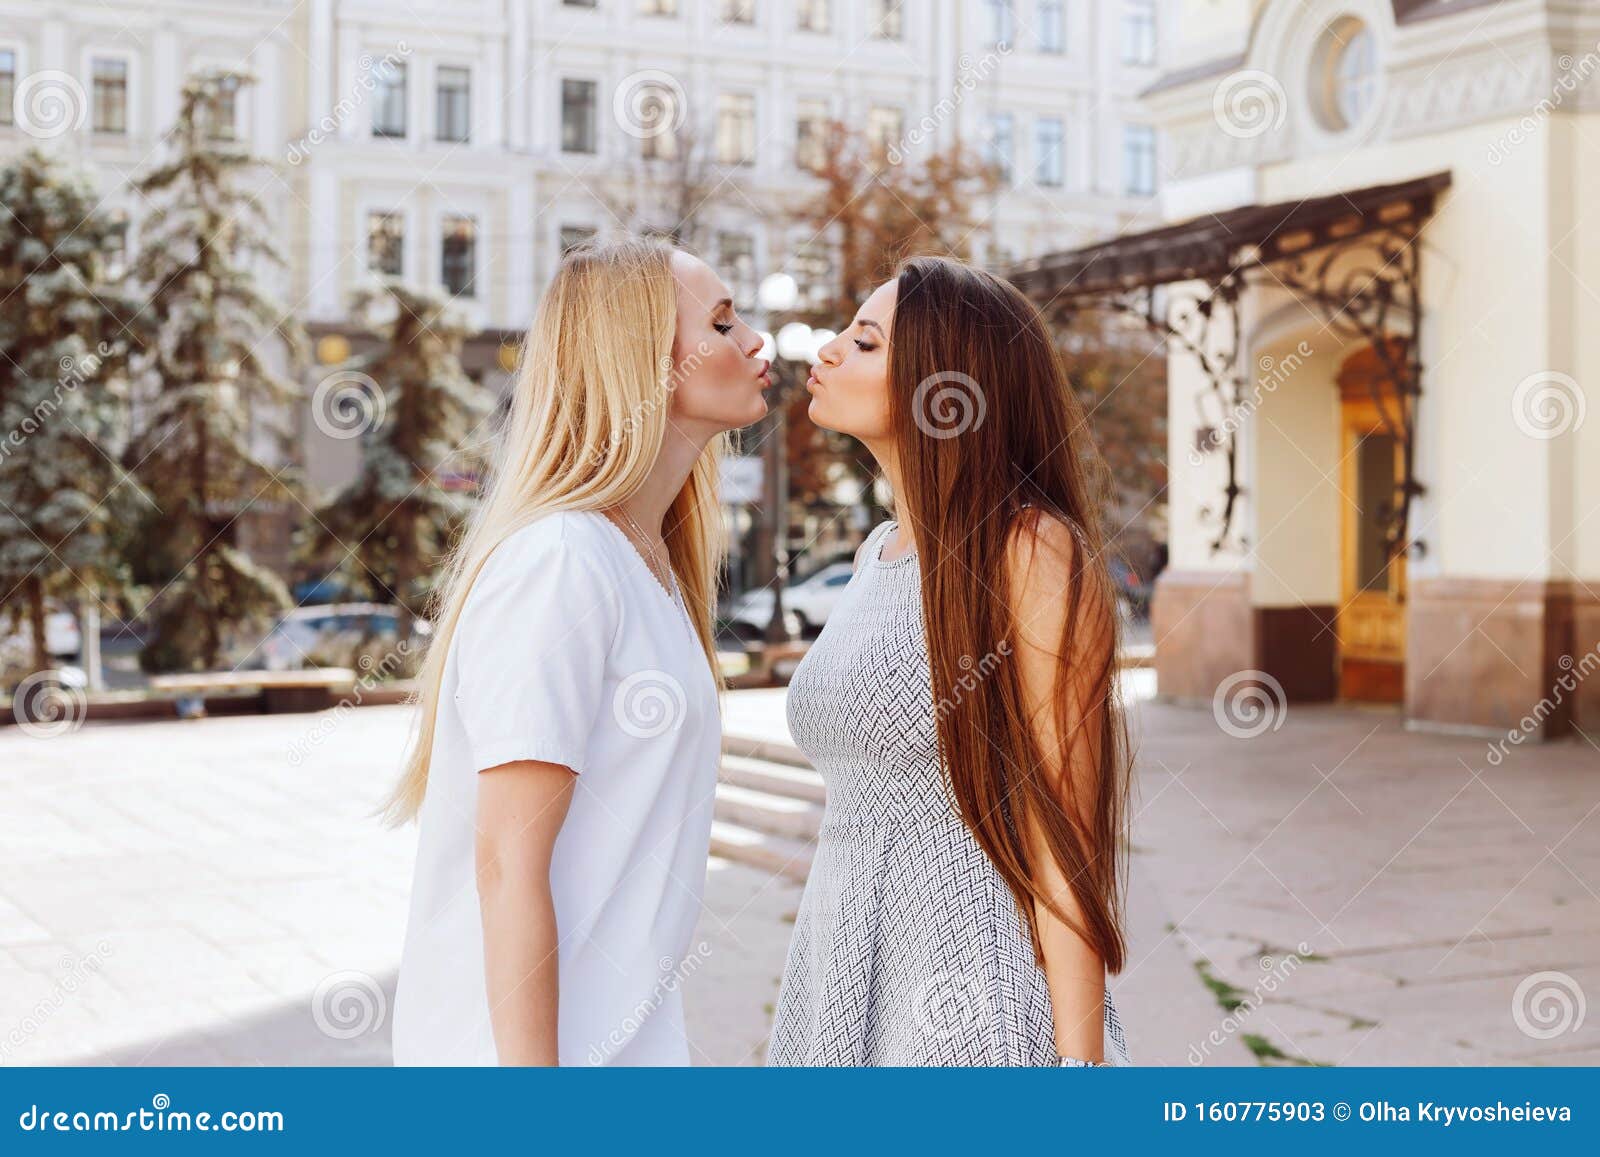 Girls dating blonde Russian Girls